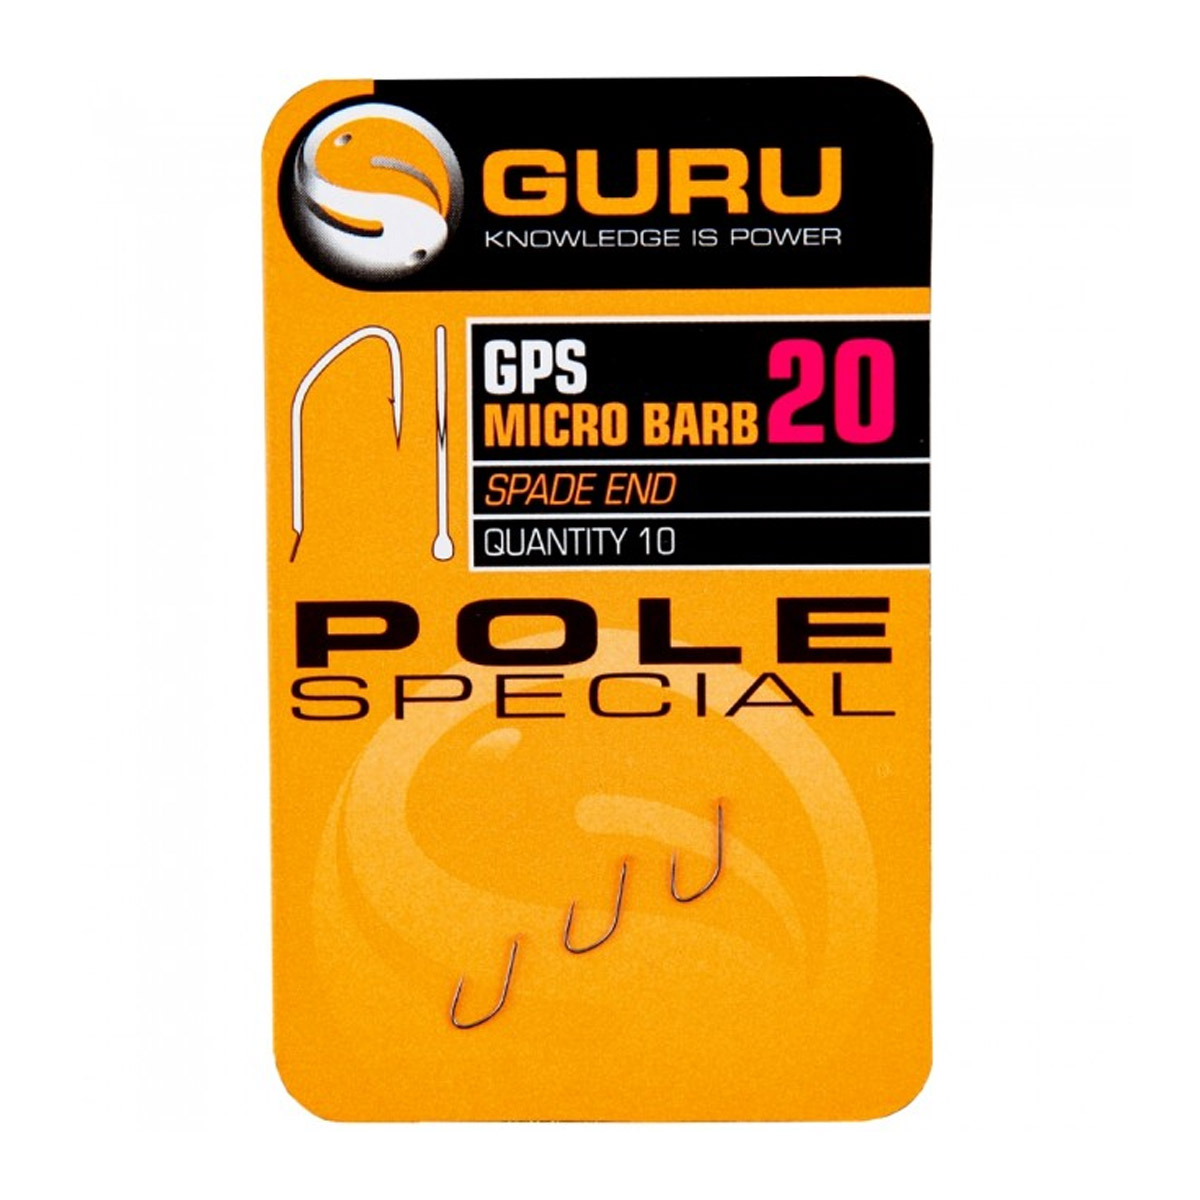 Guru Pole Special